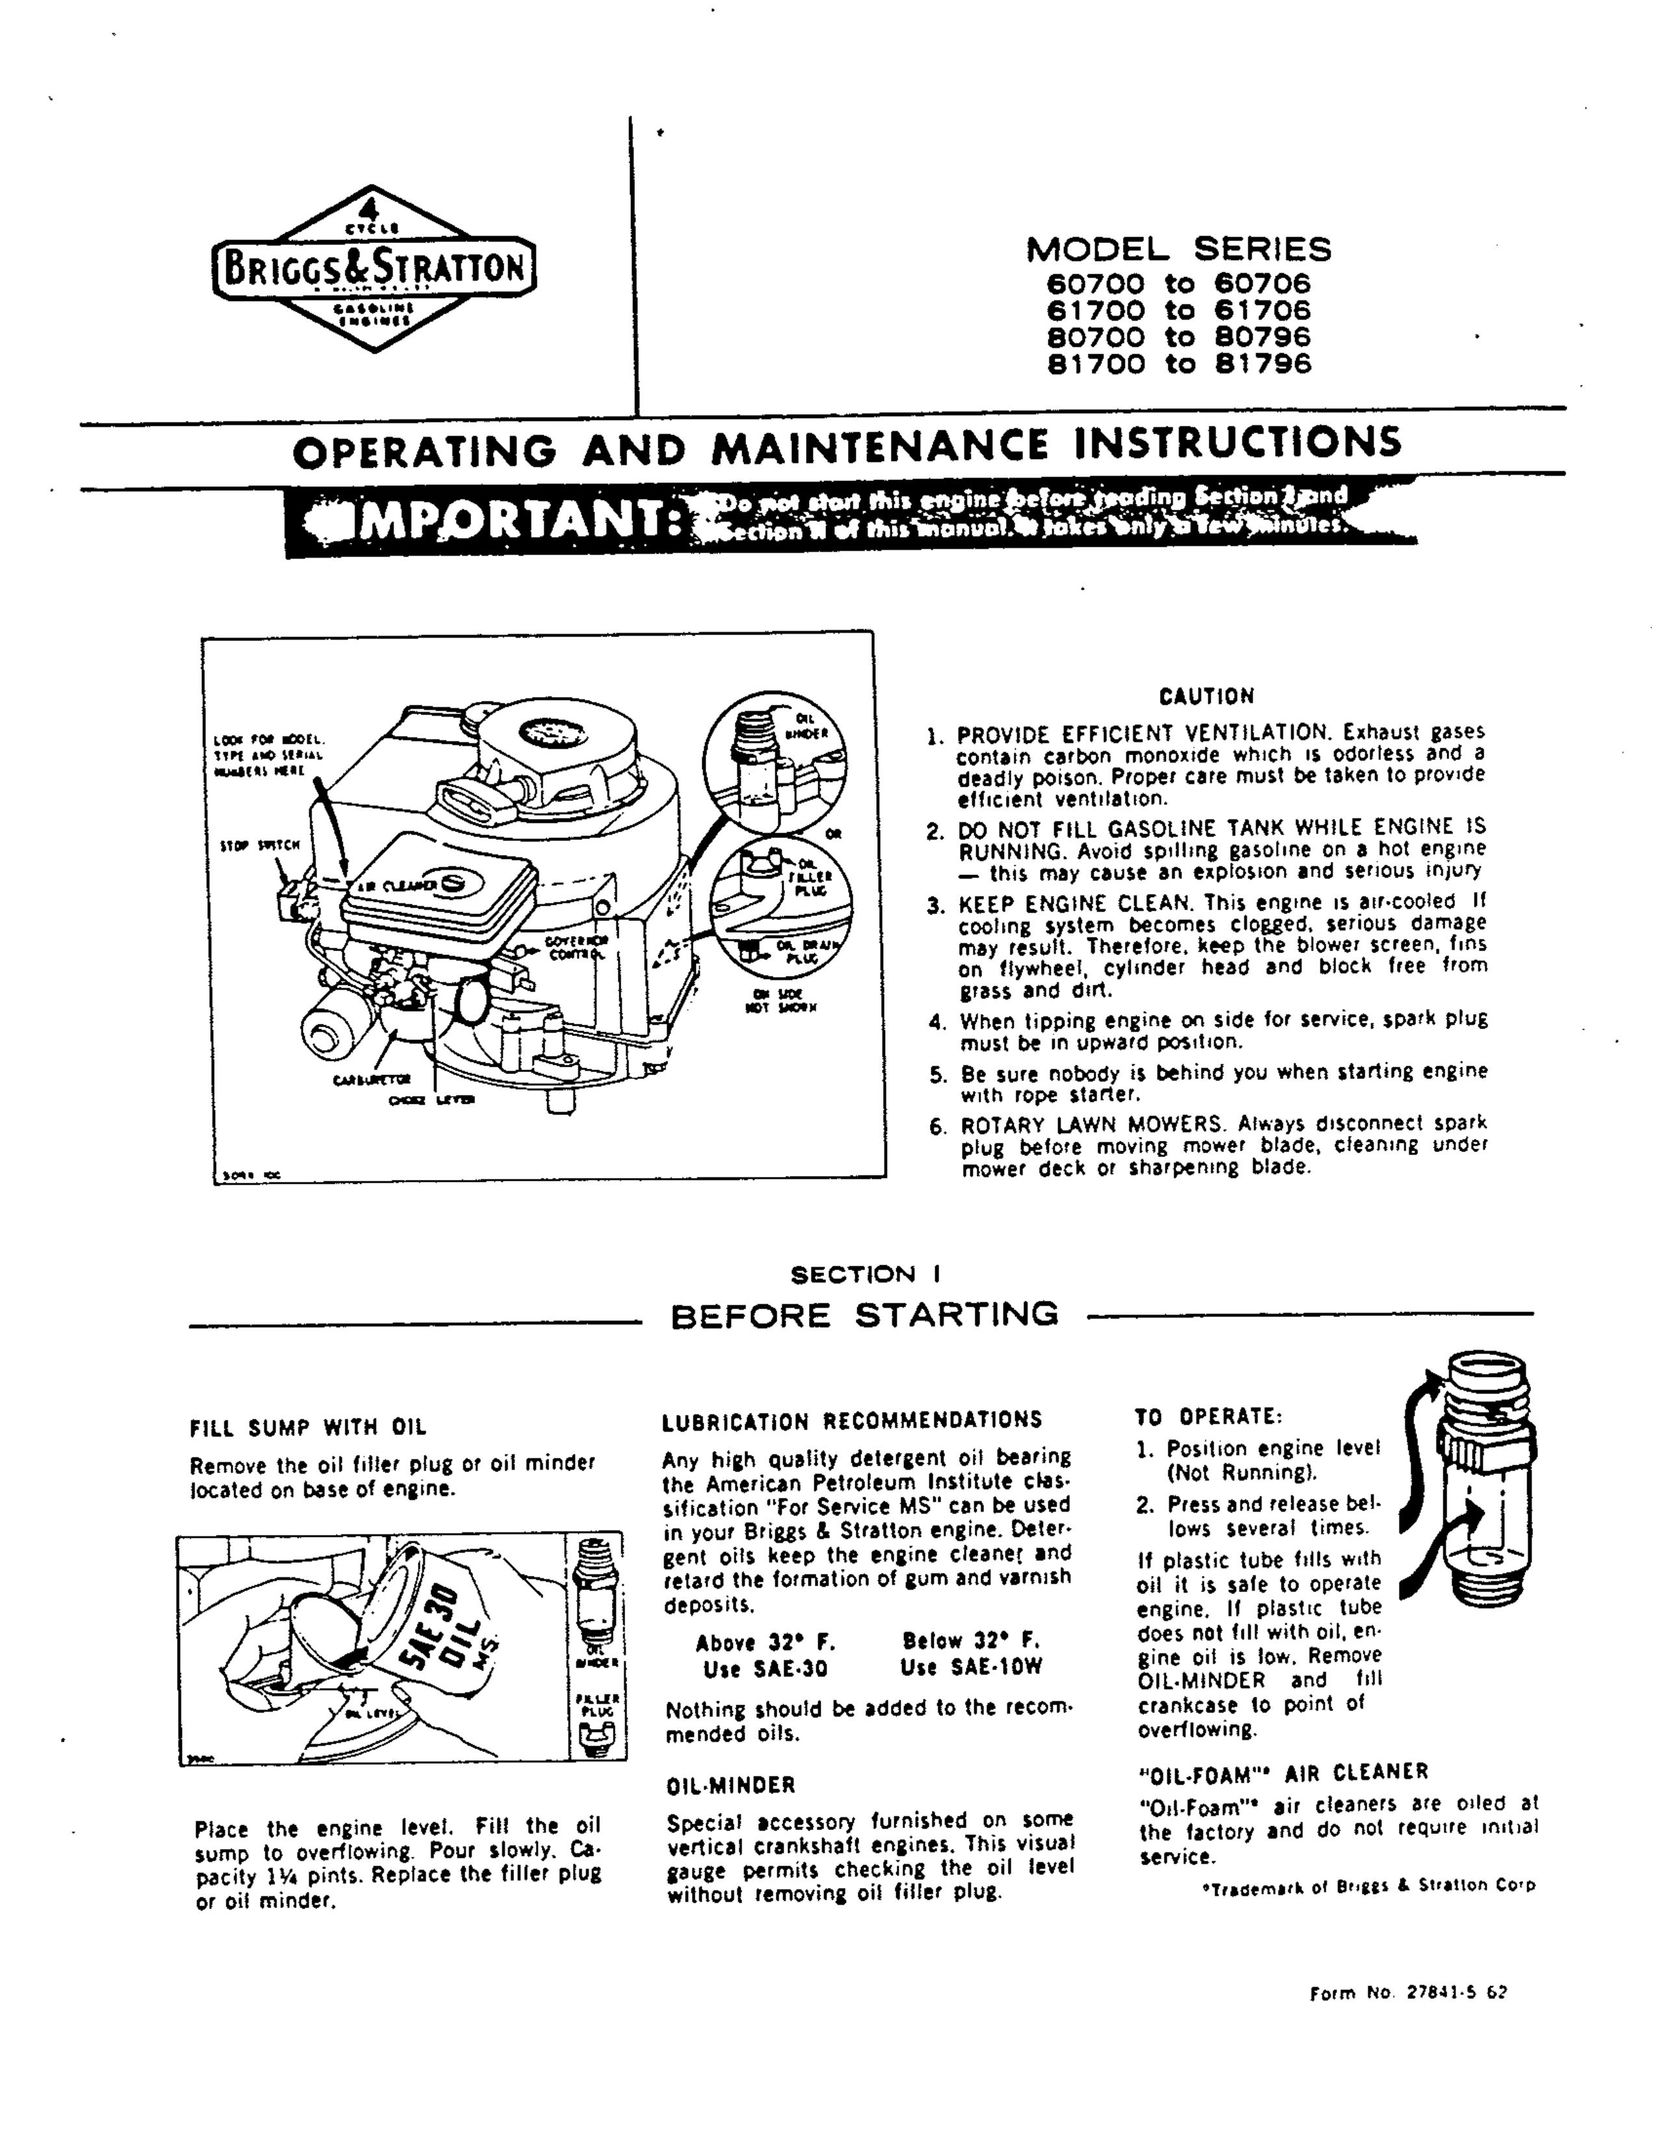 Briggs & Stratton 81700 -81796 Building Set User Manual